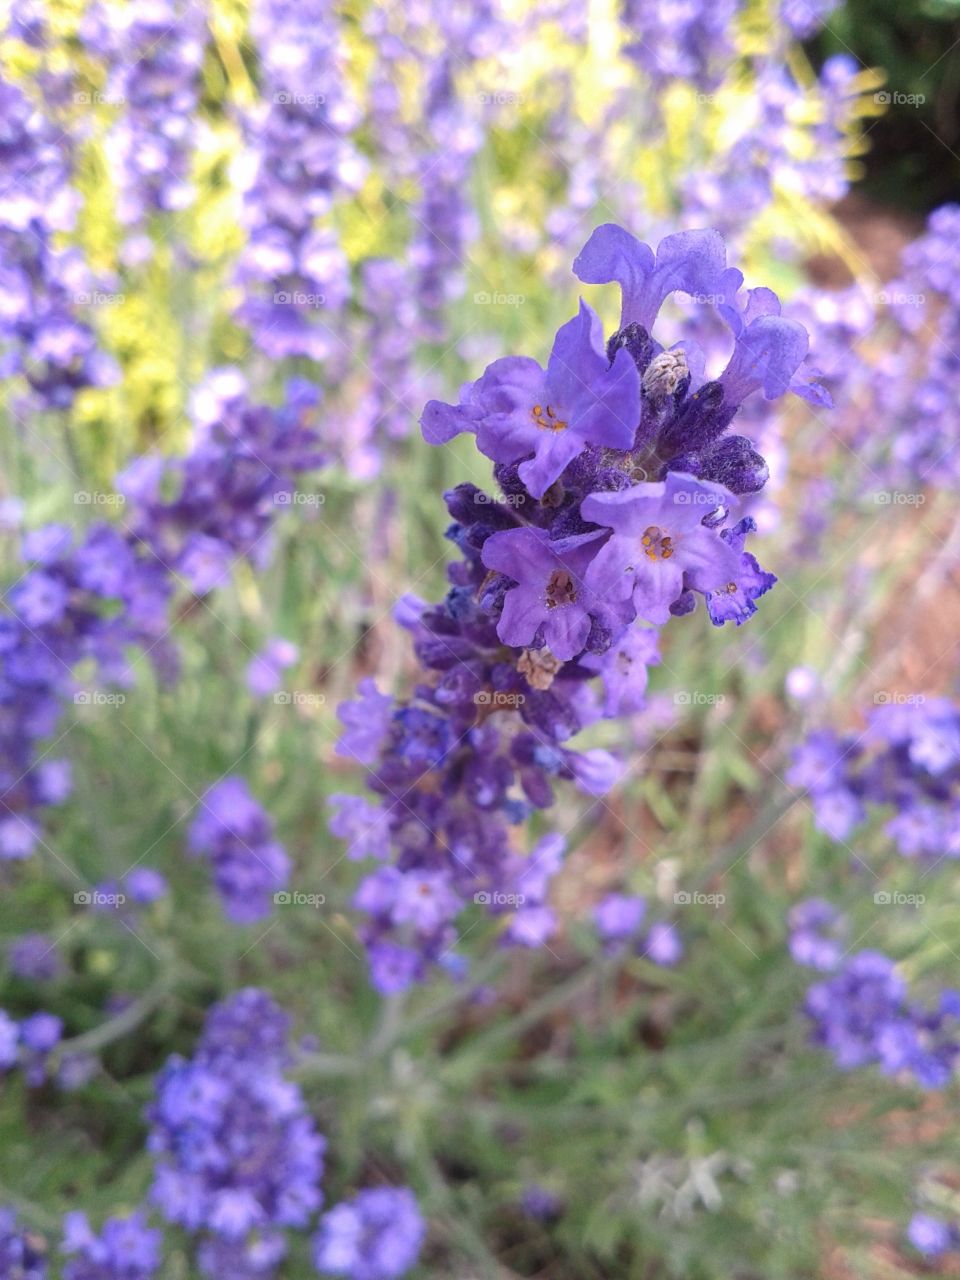 Lavender blossoms.  My favorite garden flower because it speaks of romance.